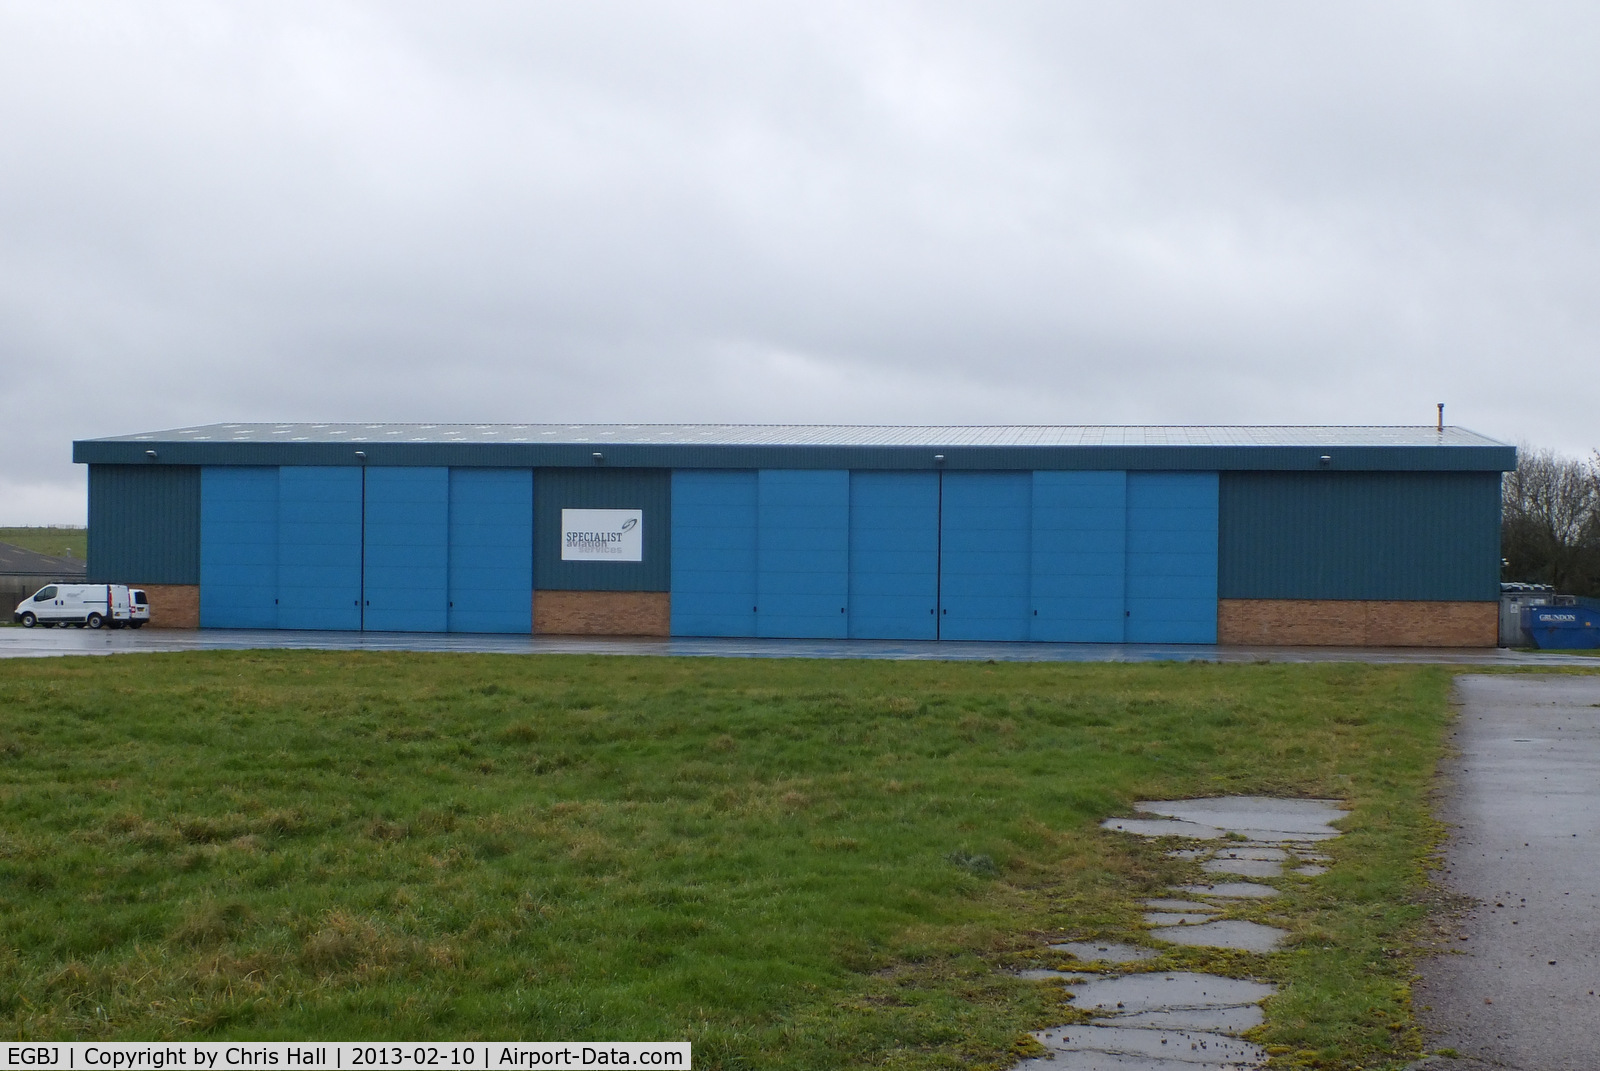 Gloucestershire Airport, Staverton, England United Kingdom (EGBJ) - Specialist Aviation Services hangar at Gloucestershire Airport